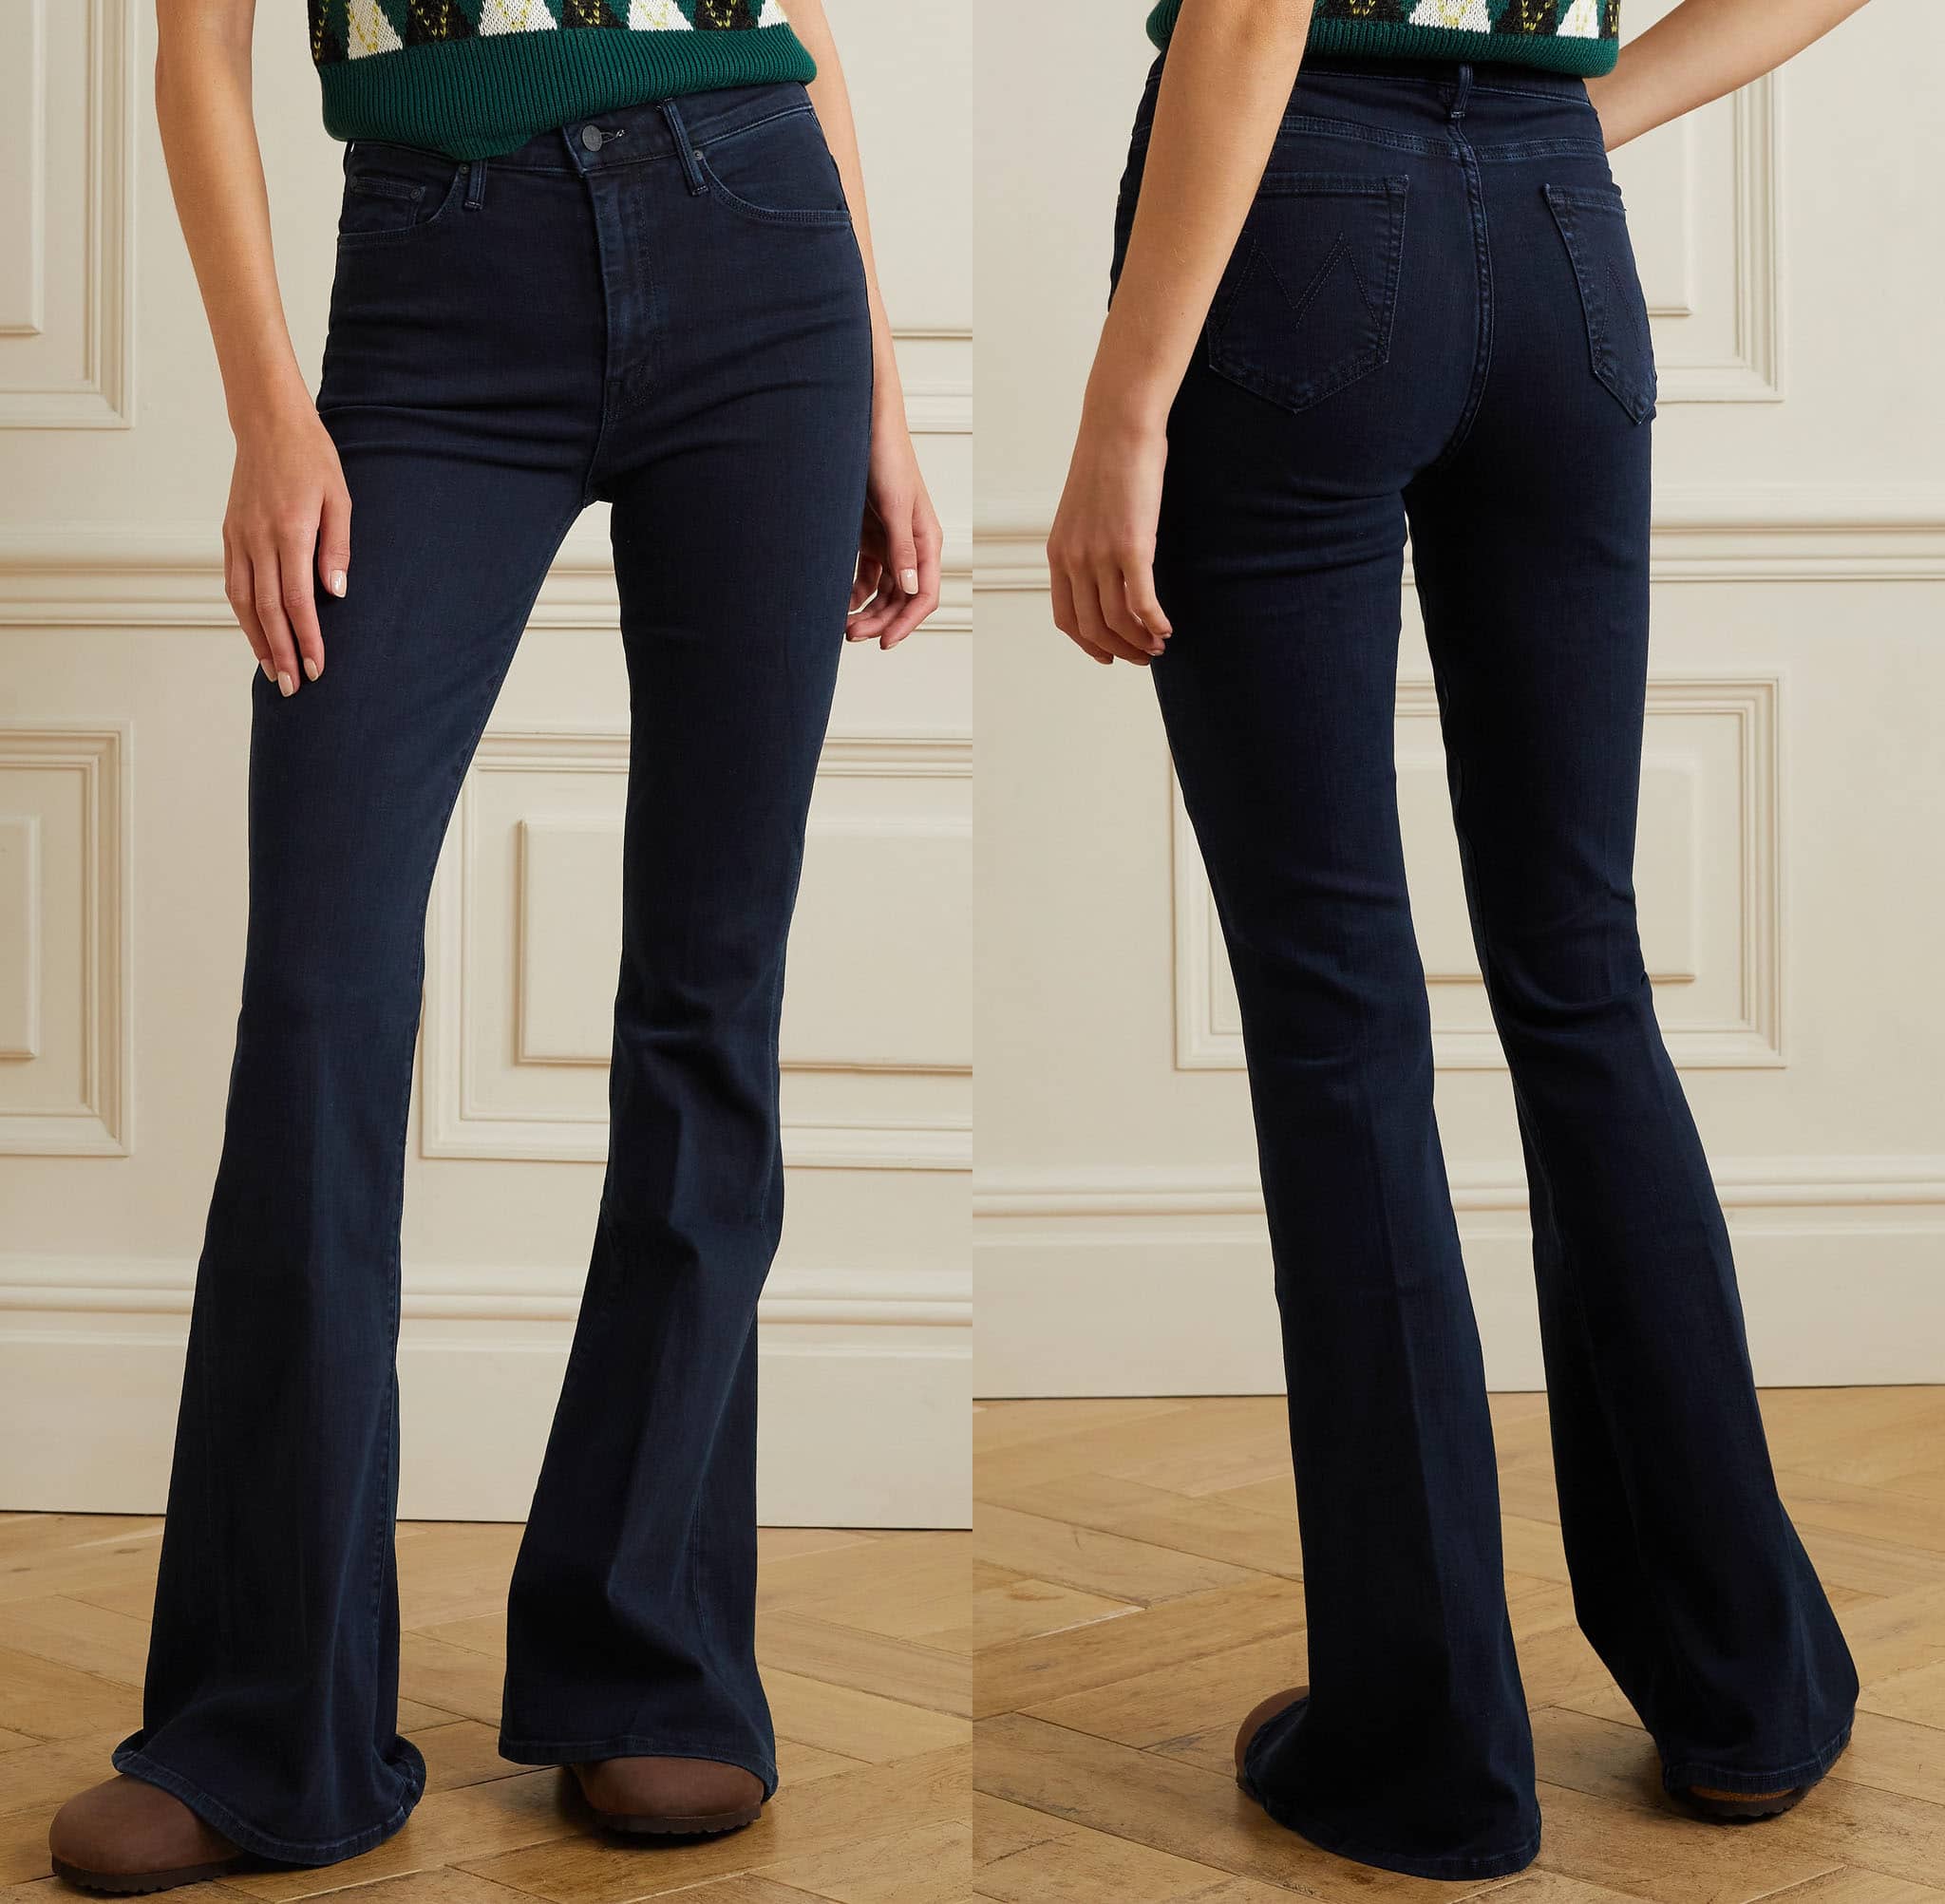 The Super Cruiser jeans feature a high-rise curve-hugging flare silhouette made of stretch denim